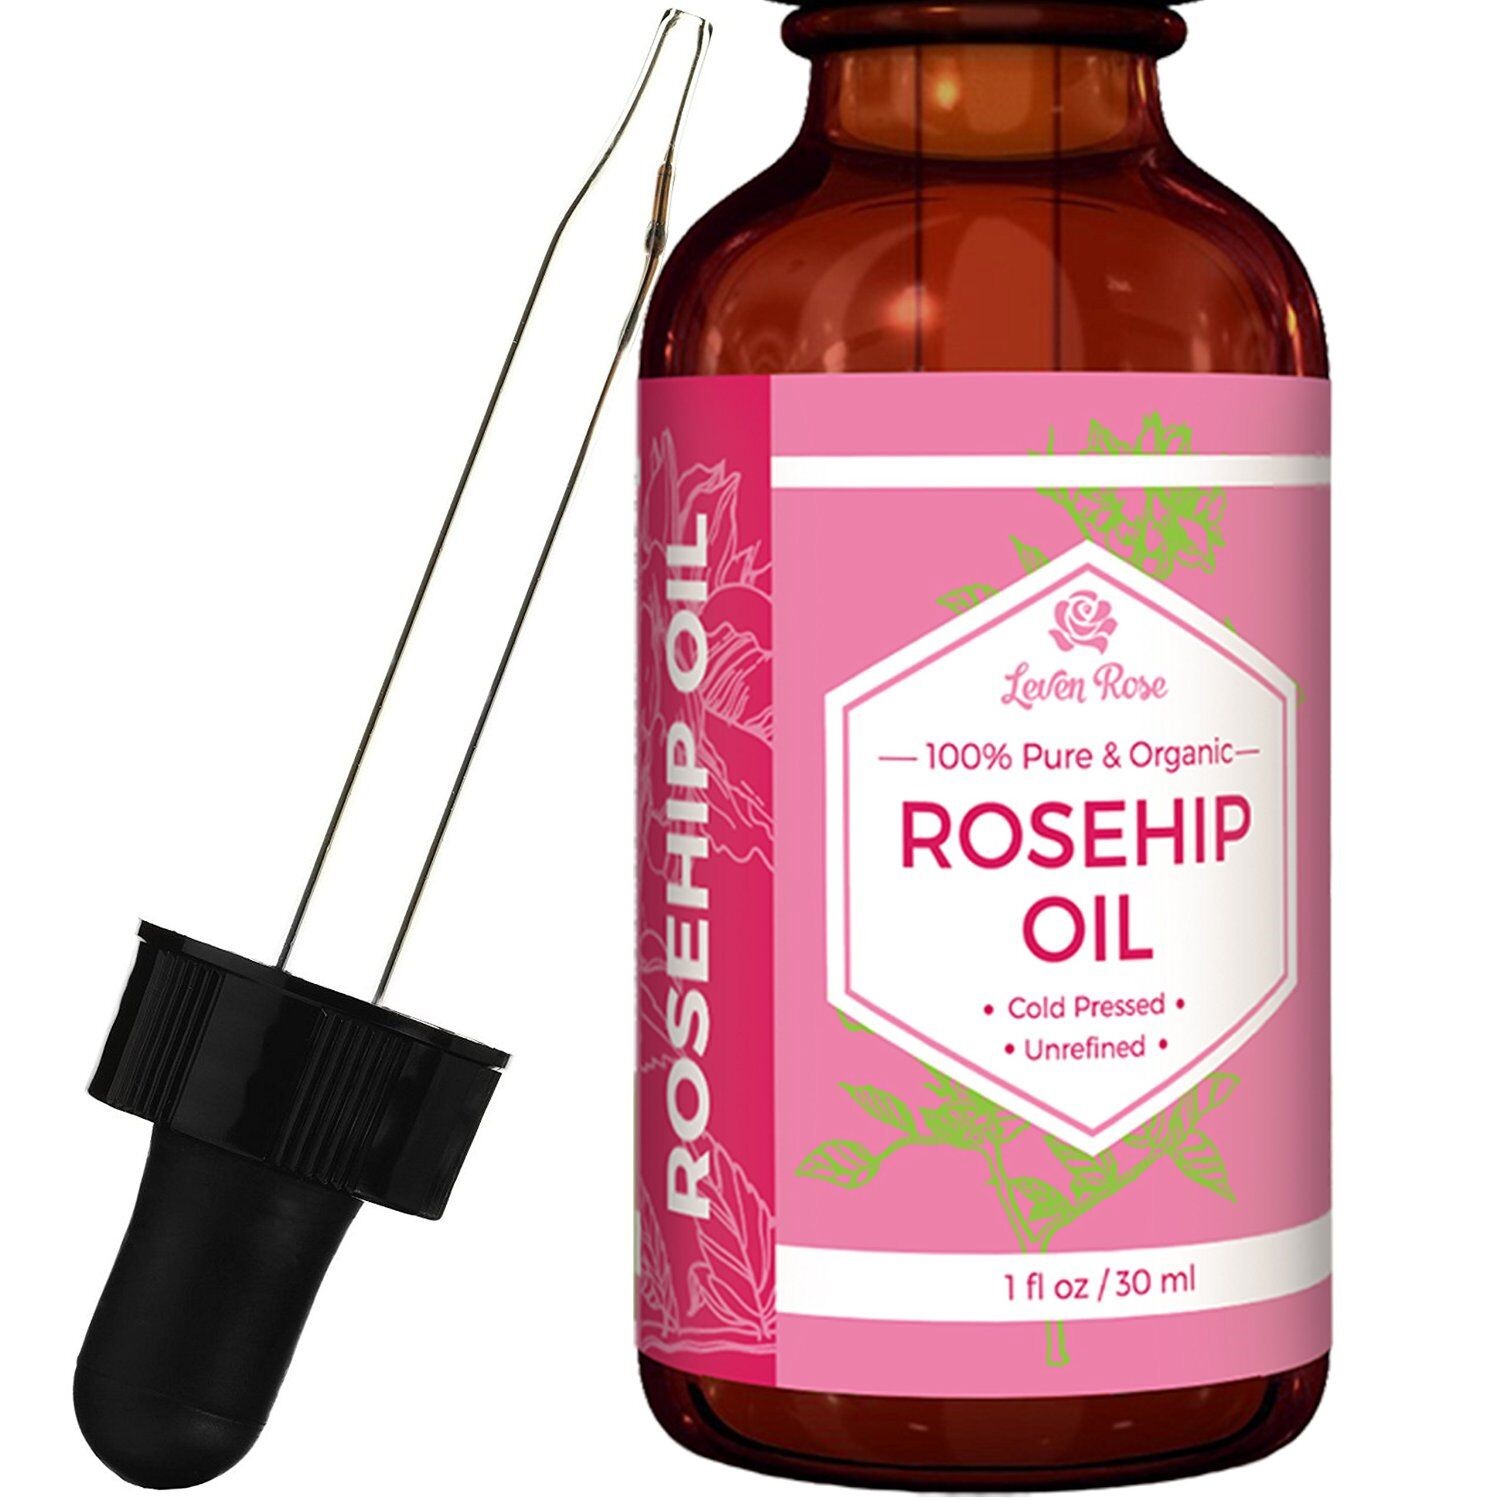 Leven Rose Organic Rosehip Oil, 1 Fl Oz - image 1 of 5